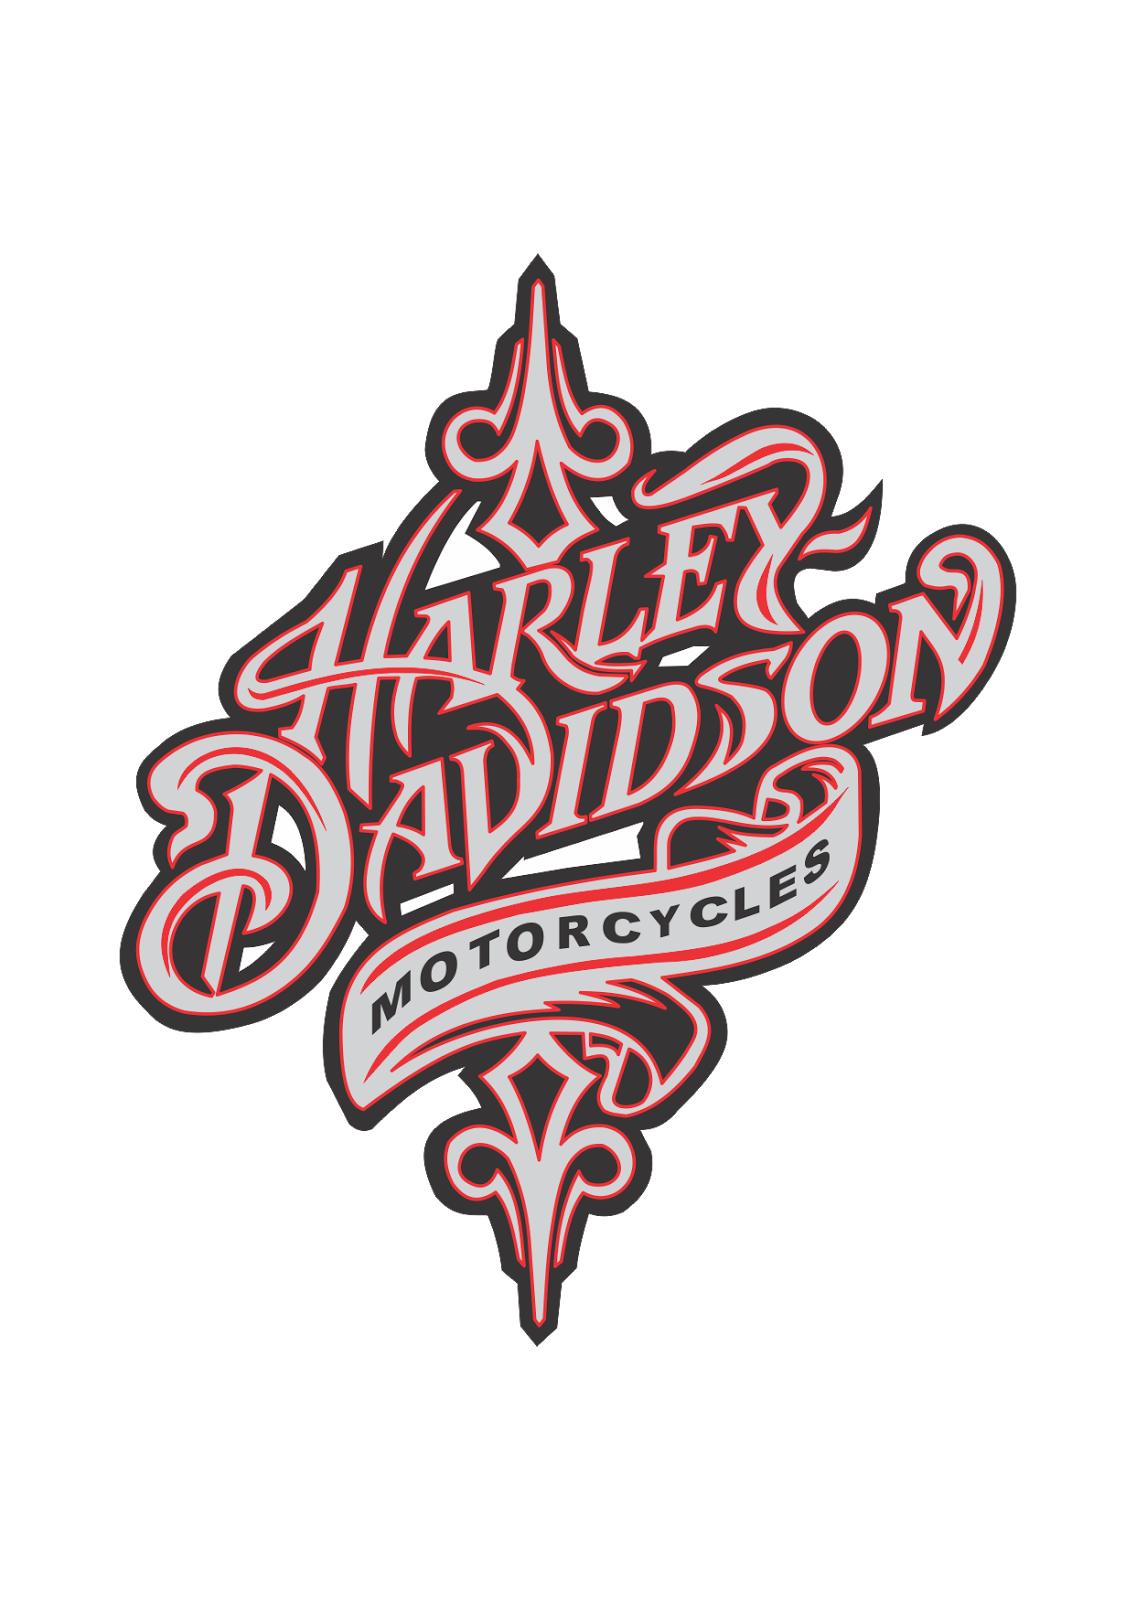 Harley davidson motorcycles Logo Vector (Motorcycle company)~ Format Cdr, Ai, Eps, Svg, PDF, PNG